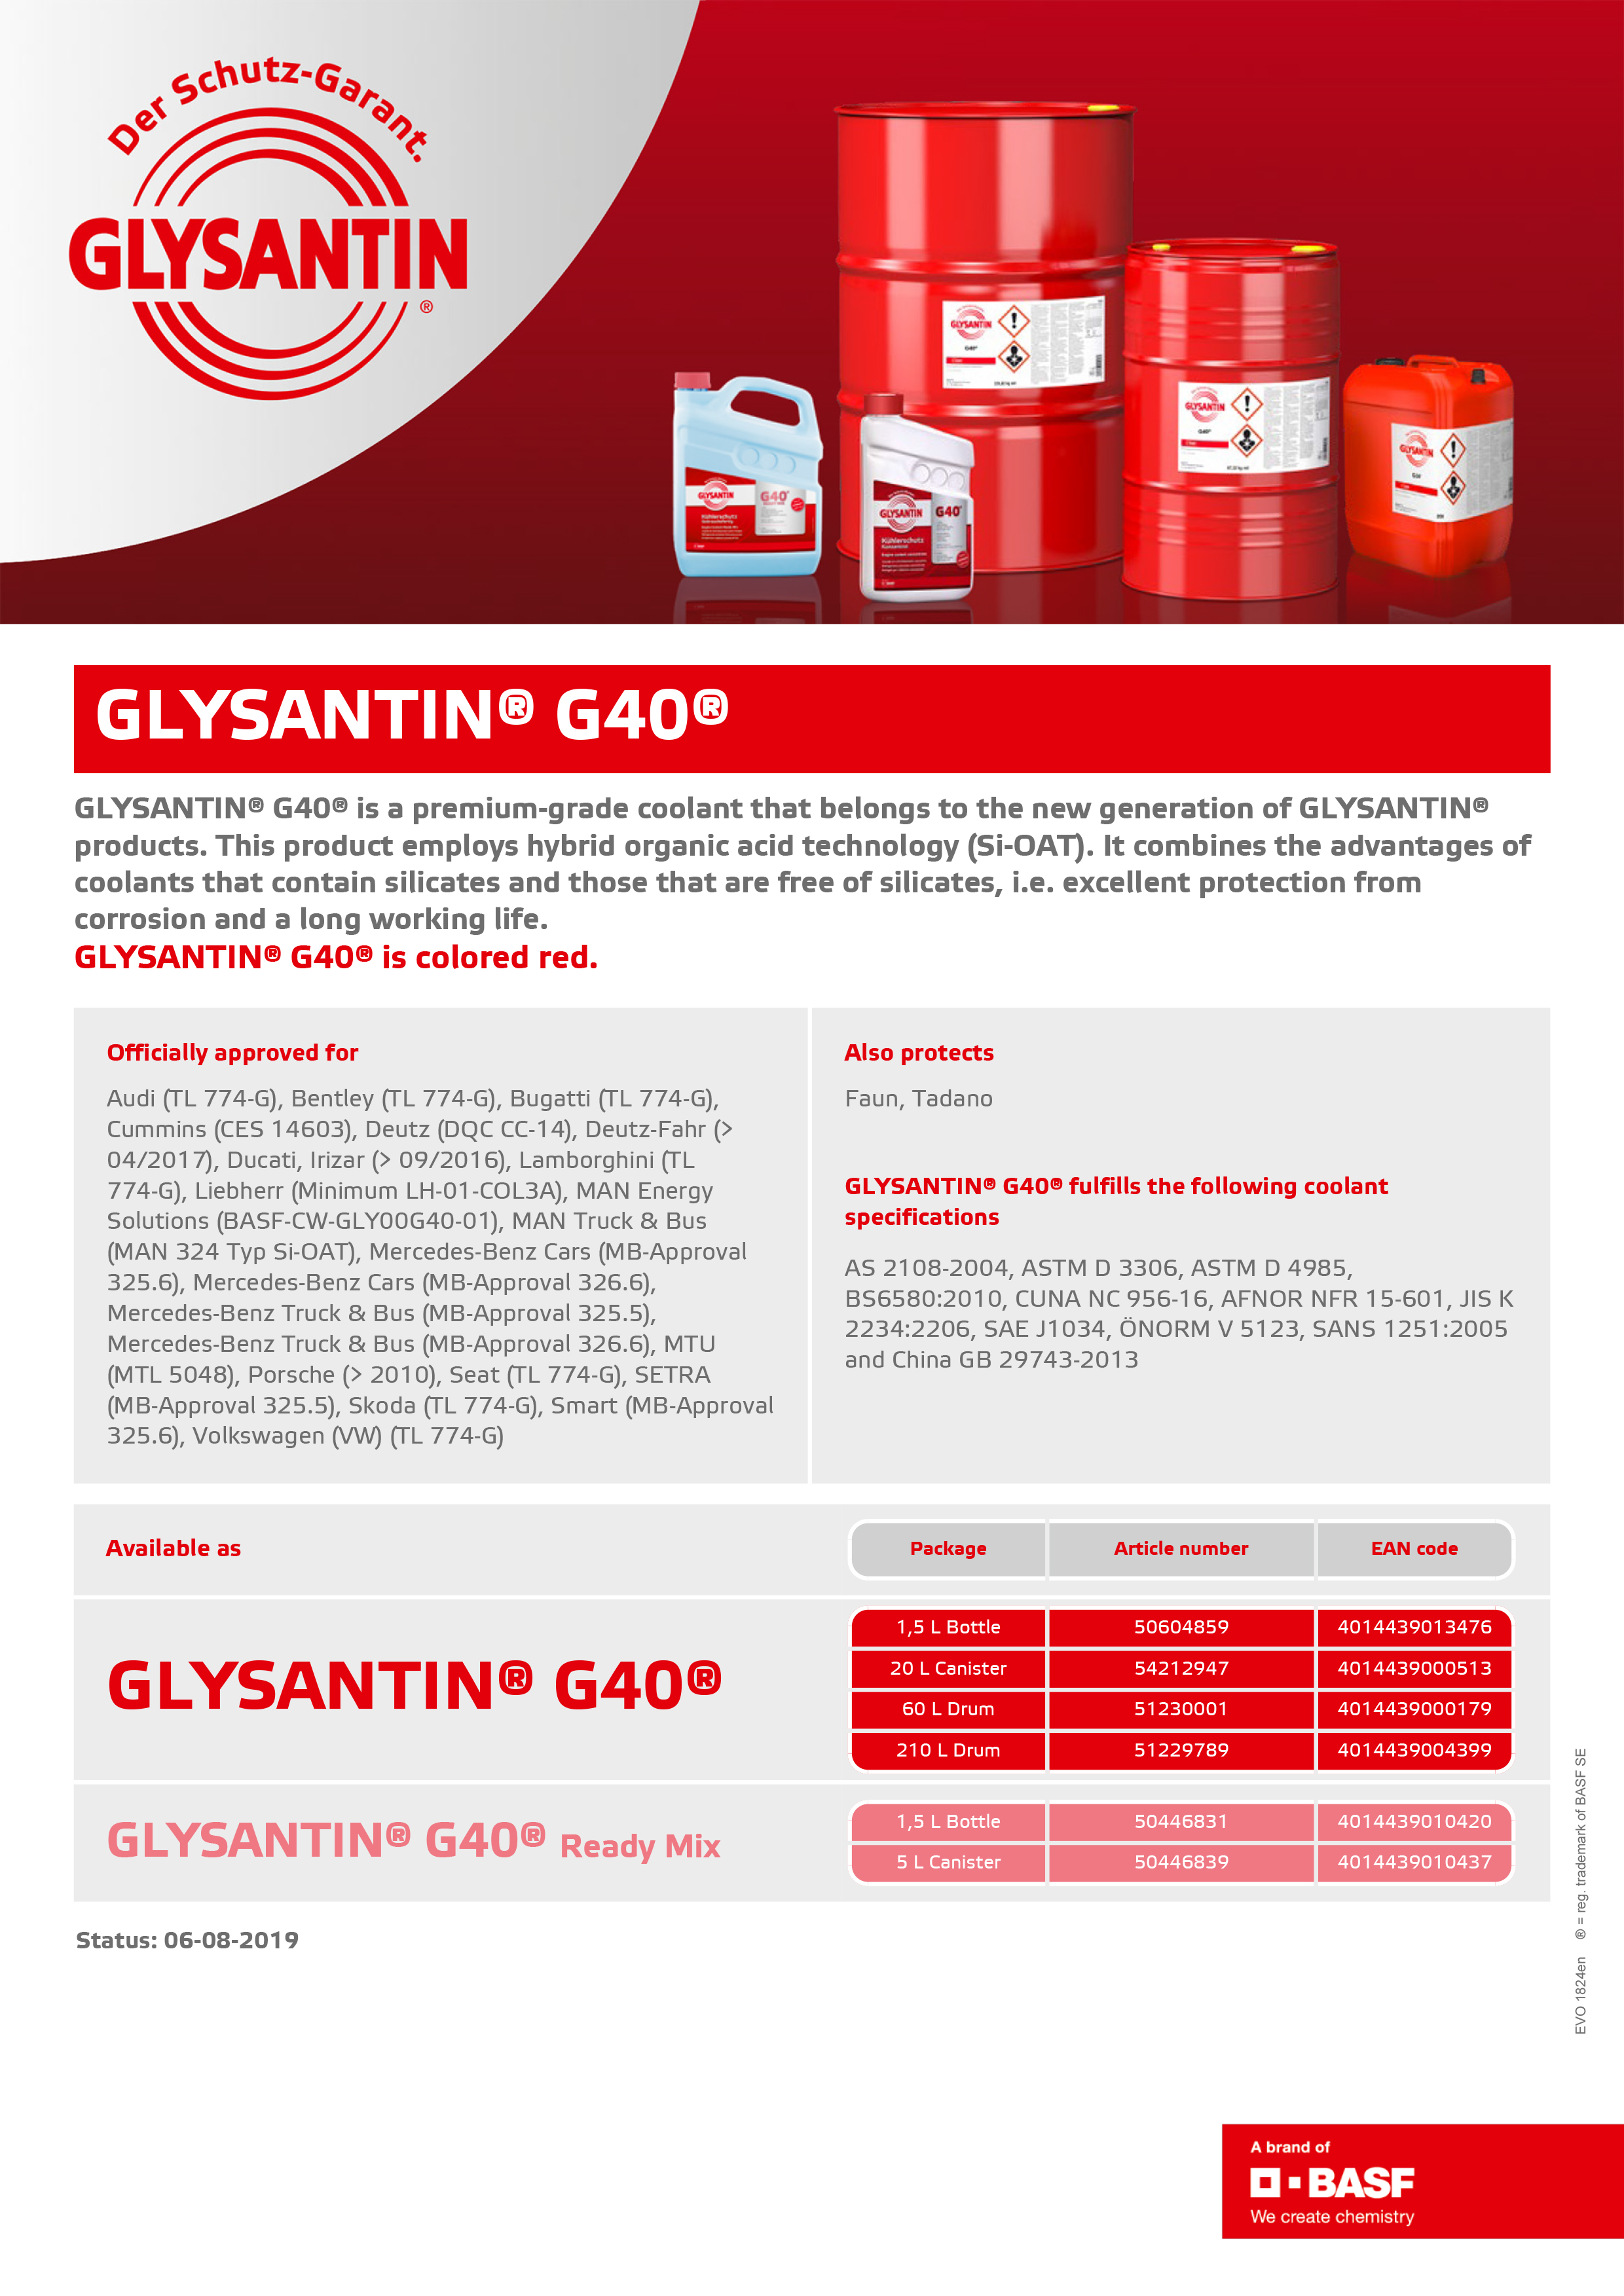 Glysantin G48 Engine Coolant by BASF (1 Liter) ขนาดใหม่